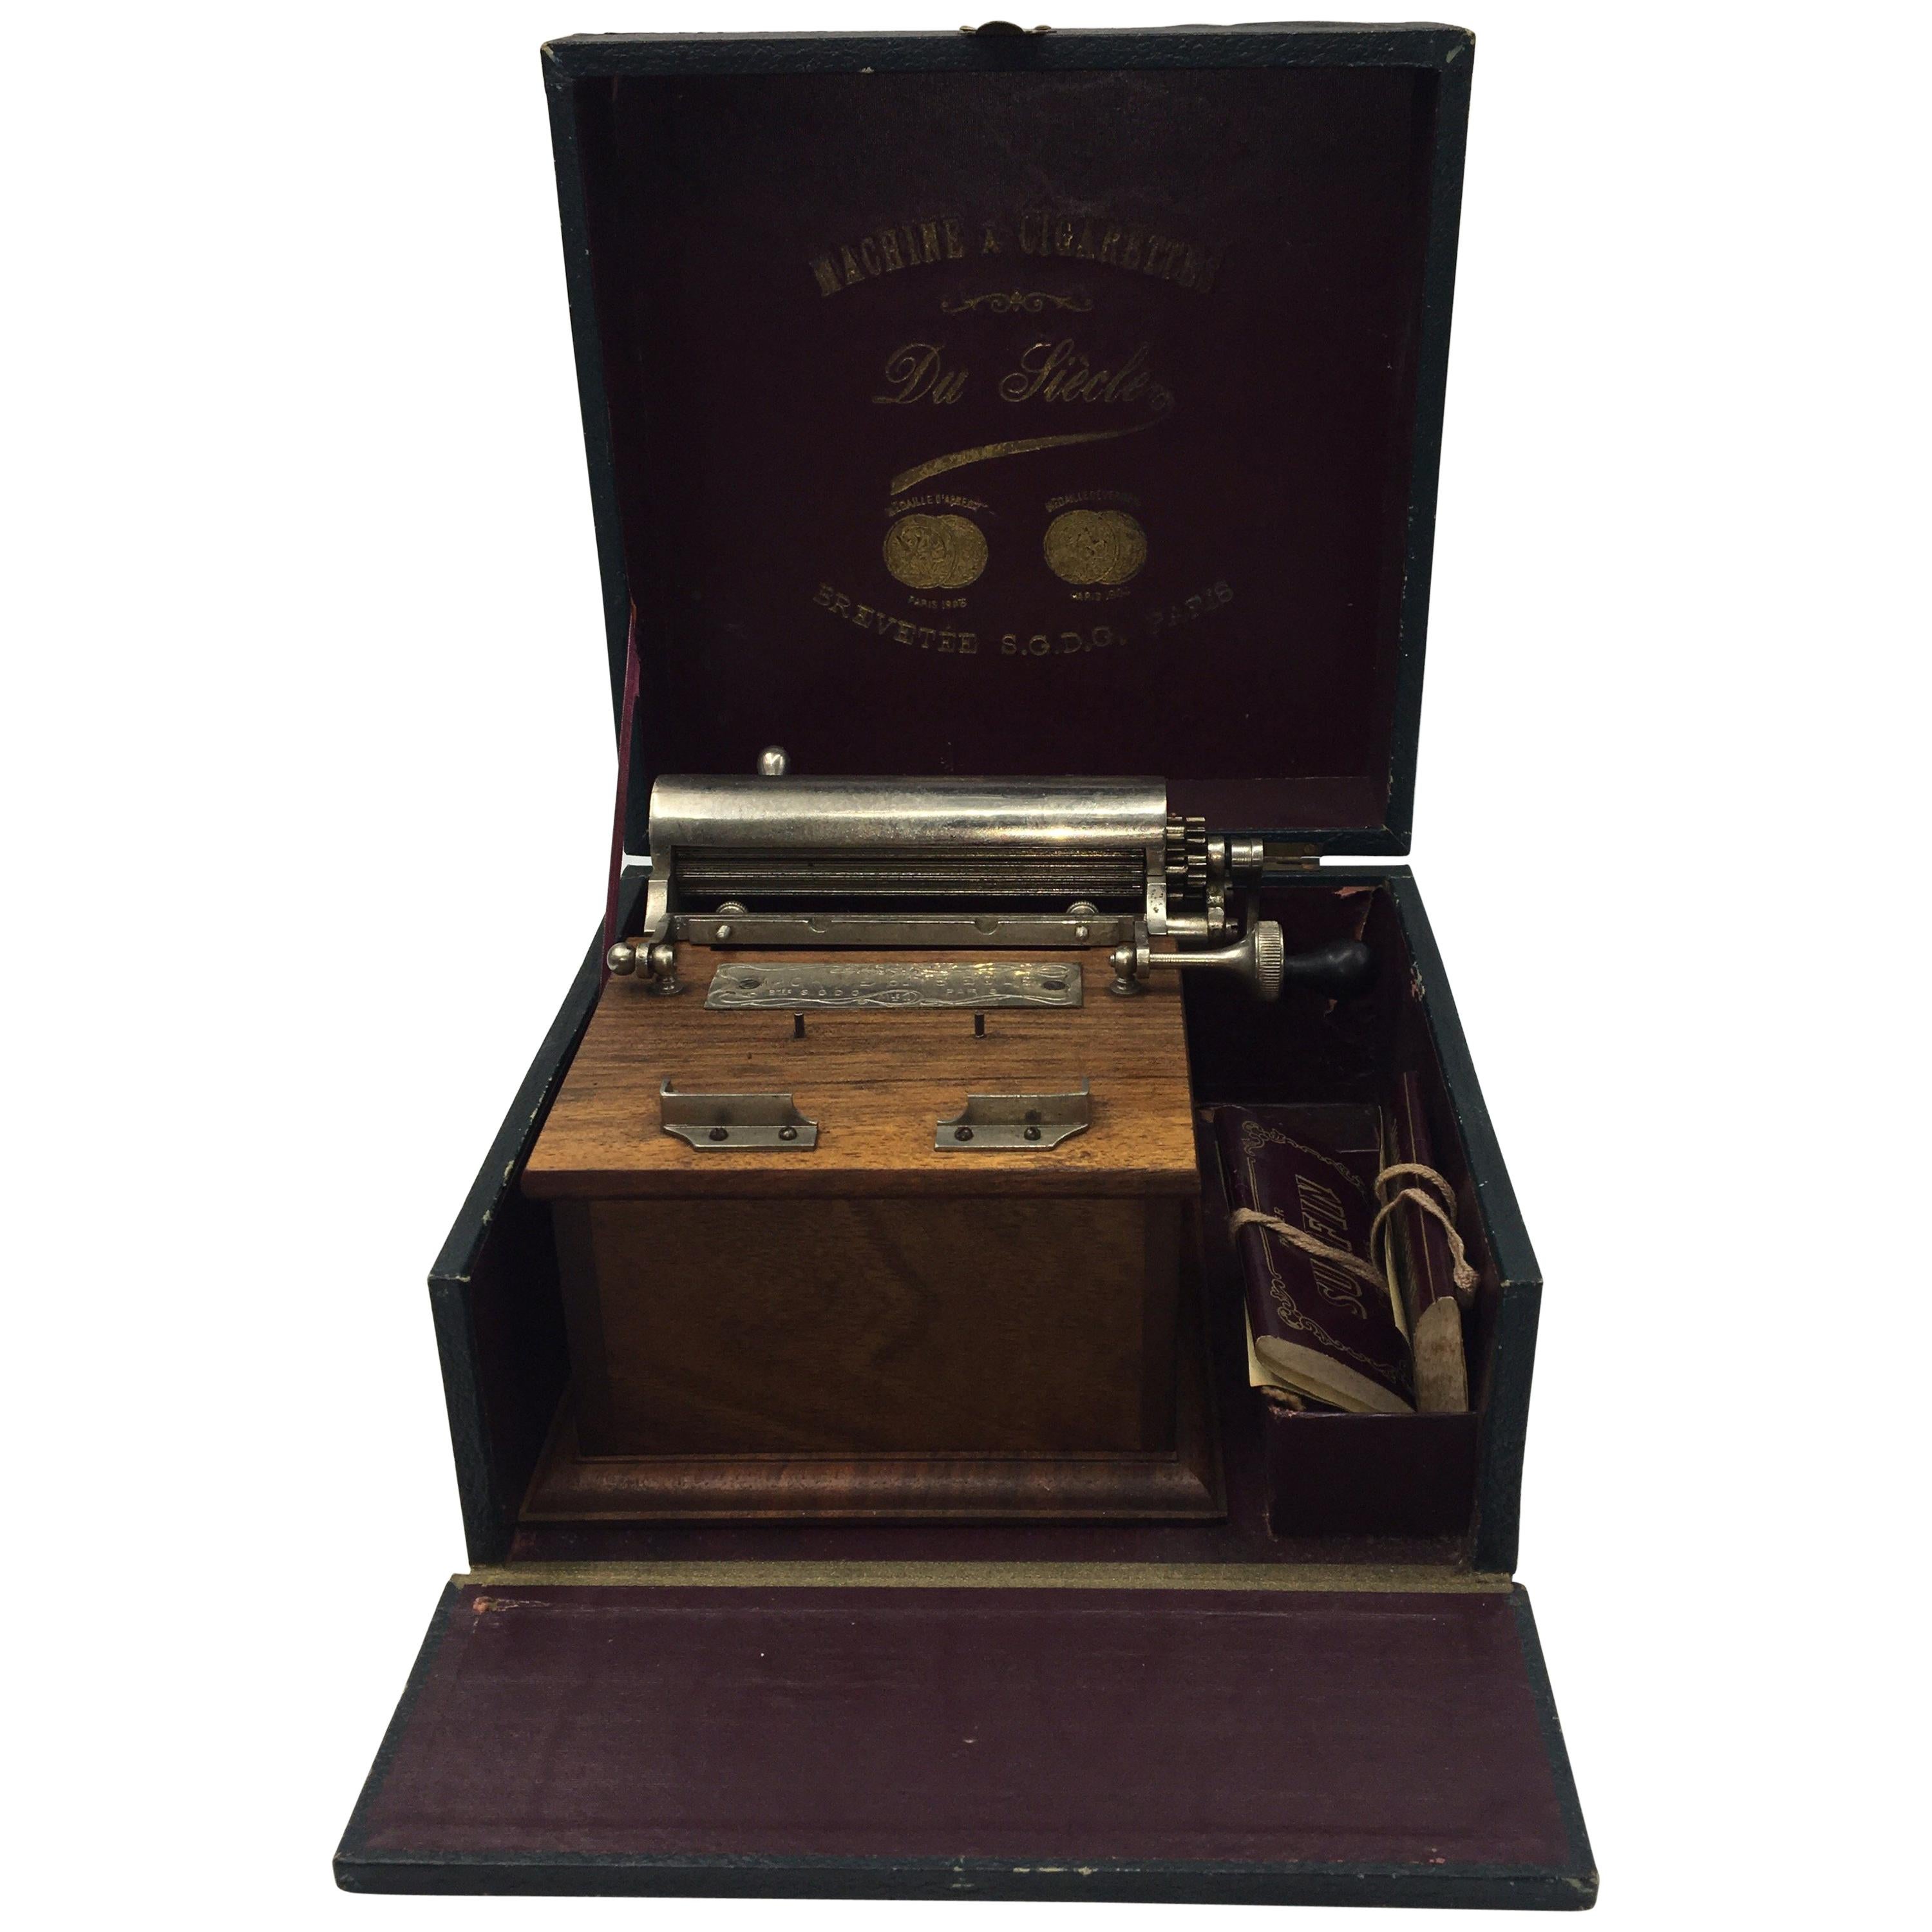 Very Rare 19th Century Cigarette Machine with Original Box, Du Siecle For Sale